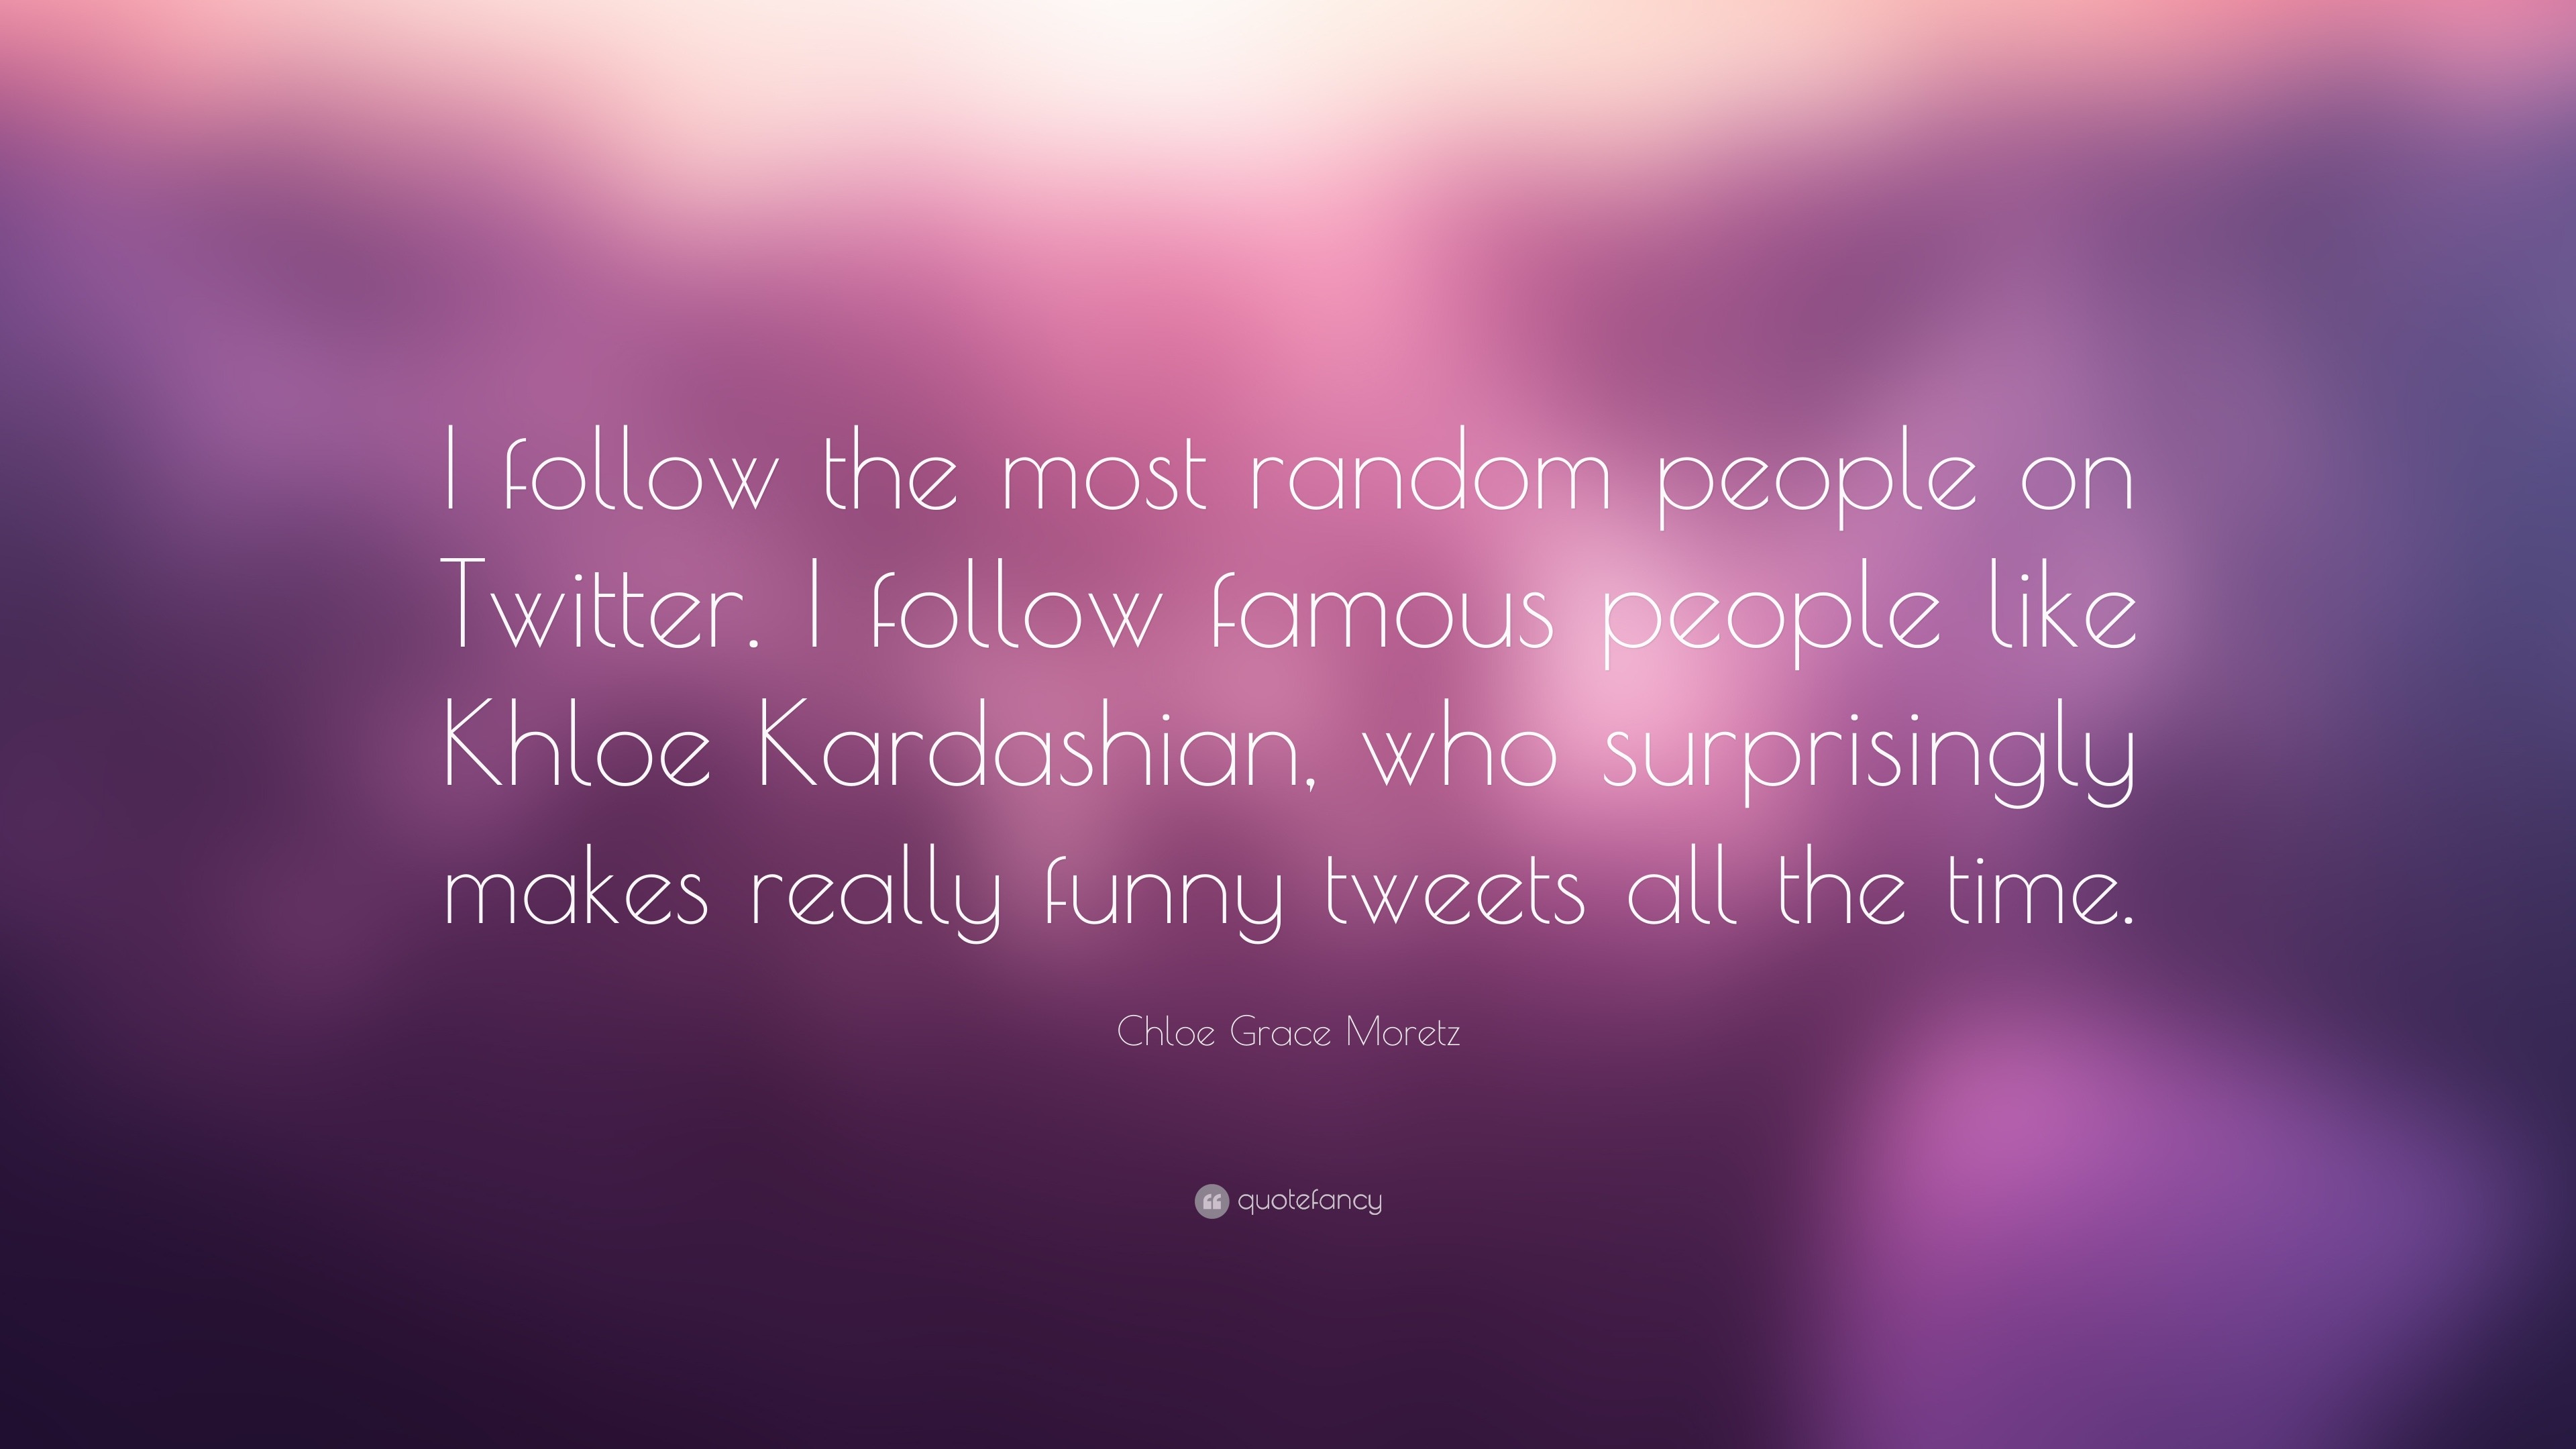 Chloe Grace Moretz Quote: “I follow the most random people on Twitter. I  follow famous people like Khloe Kardashian, who surprisingly makes really  ...”